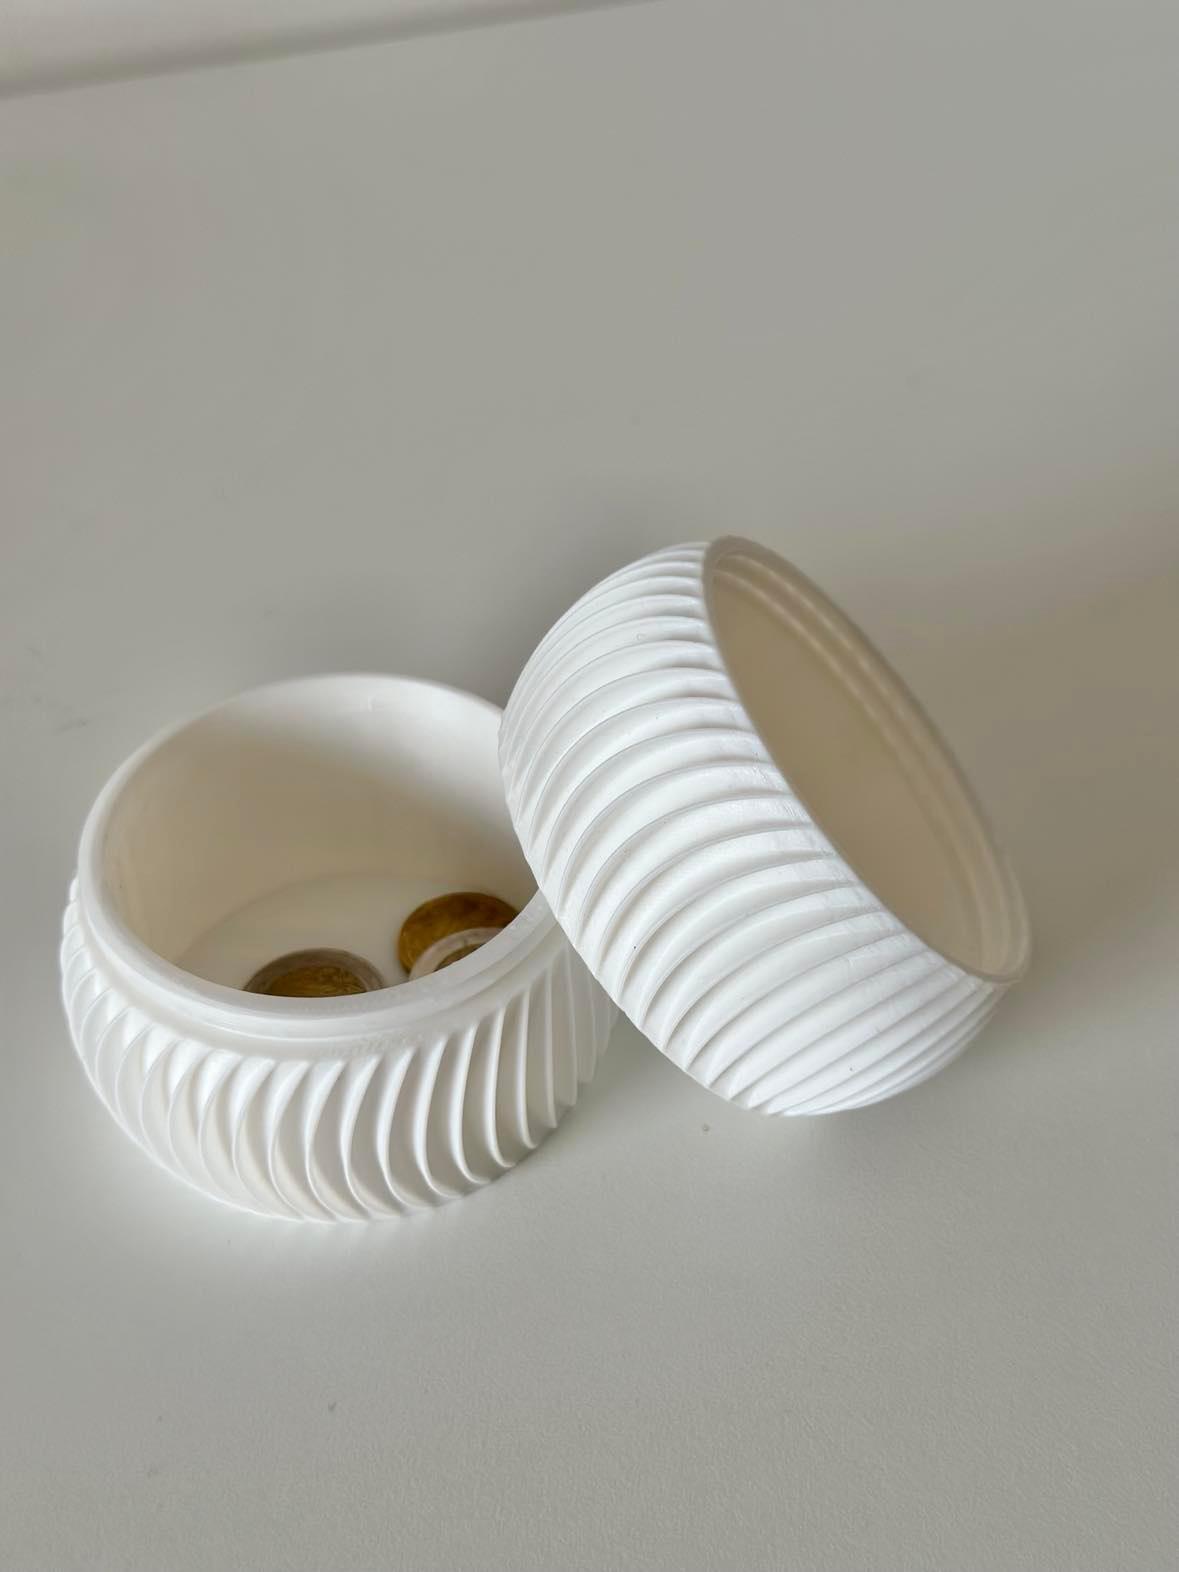 Swirly minimalist coin box / piggy bank 3d model